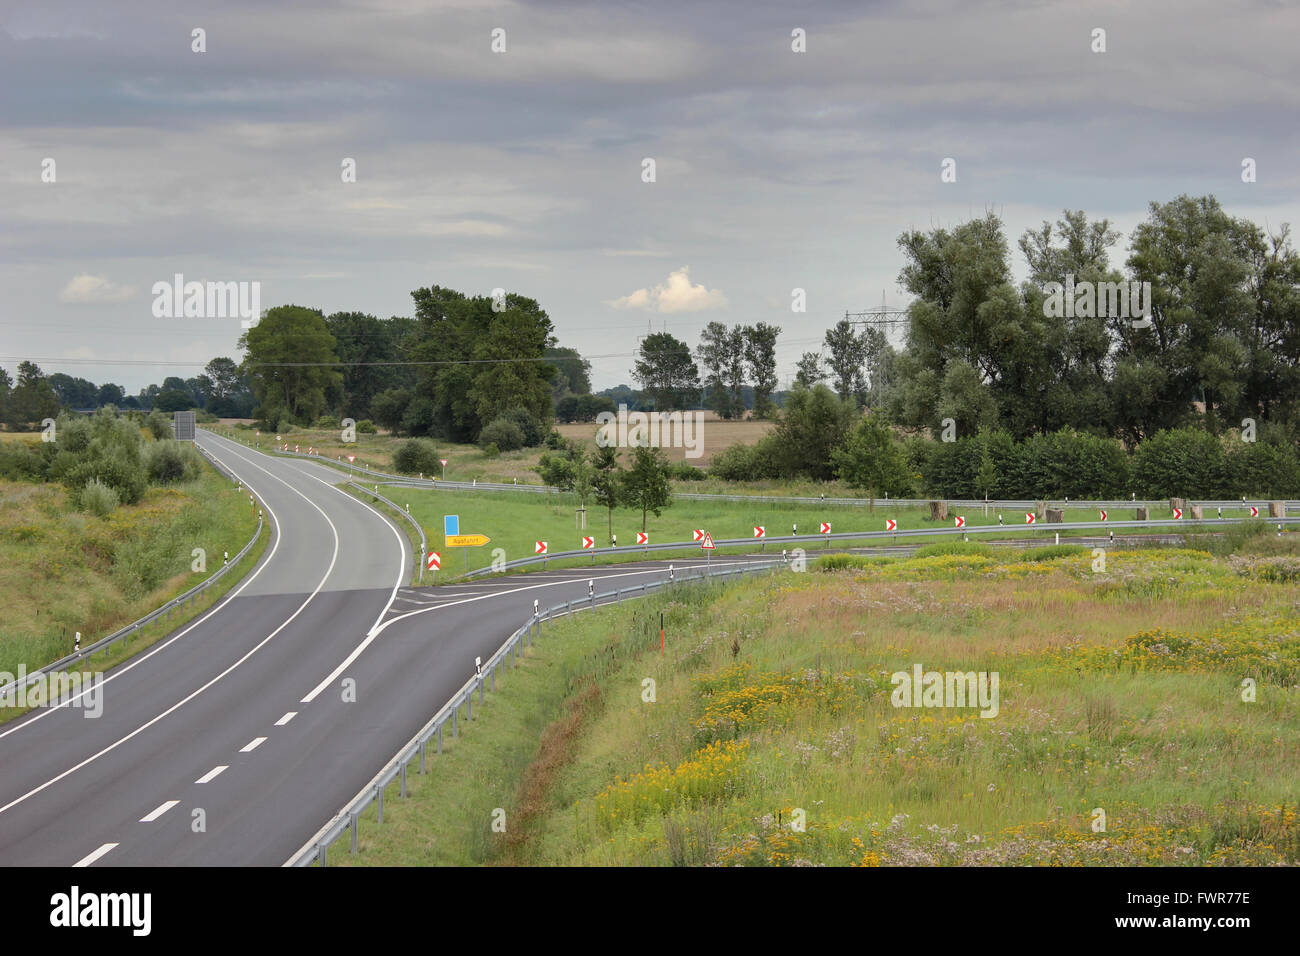 Federal highway (Bundesstrasse) in Mecklenburg-Vorpommern. The sign says 'Ausfahrt' = exit. Stock Photo